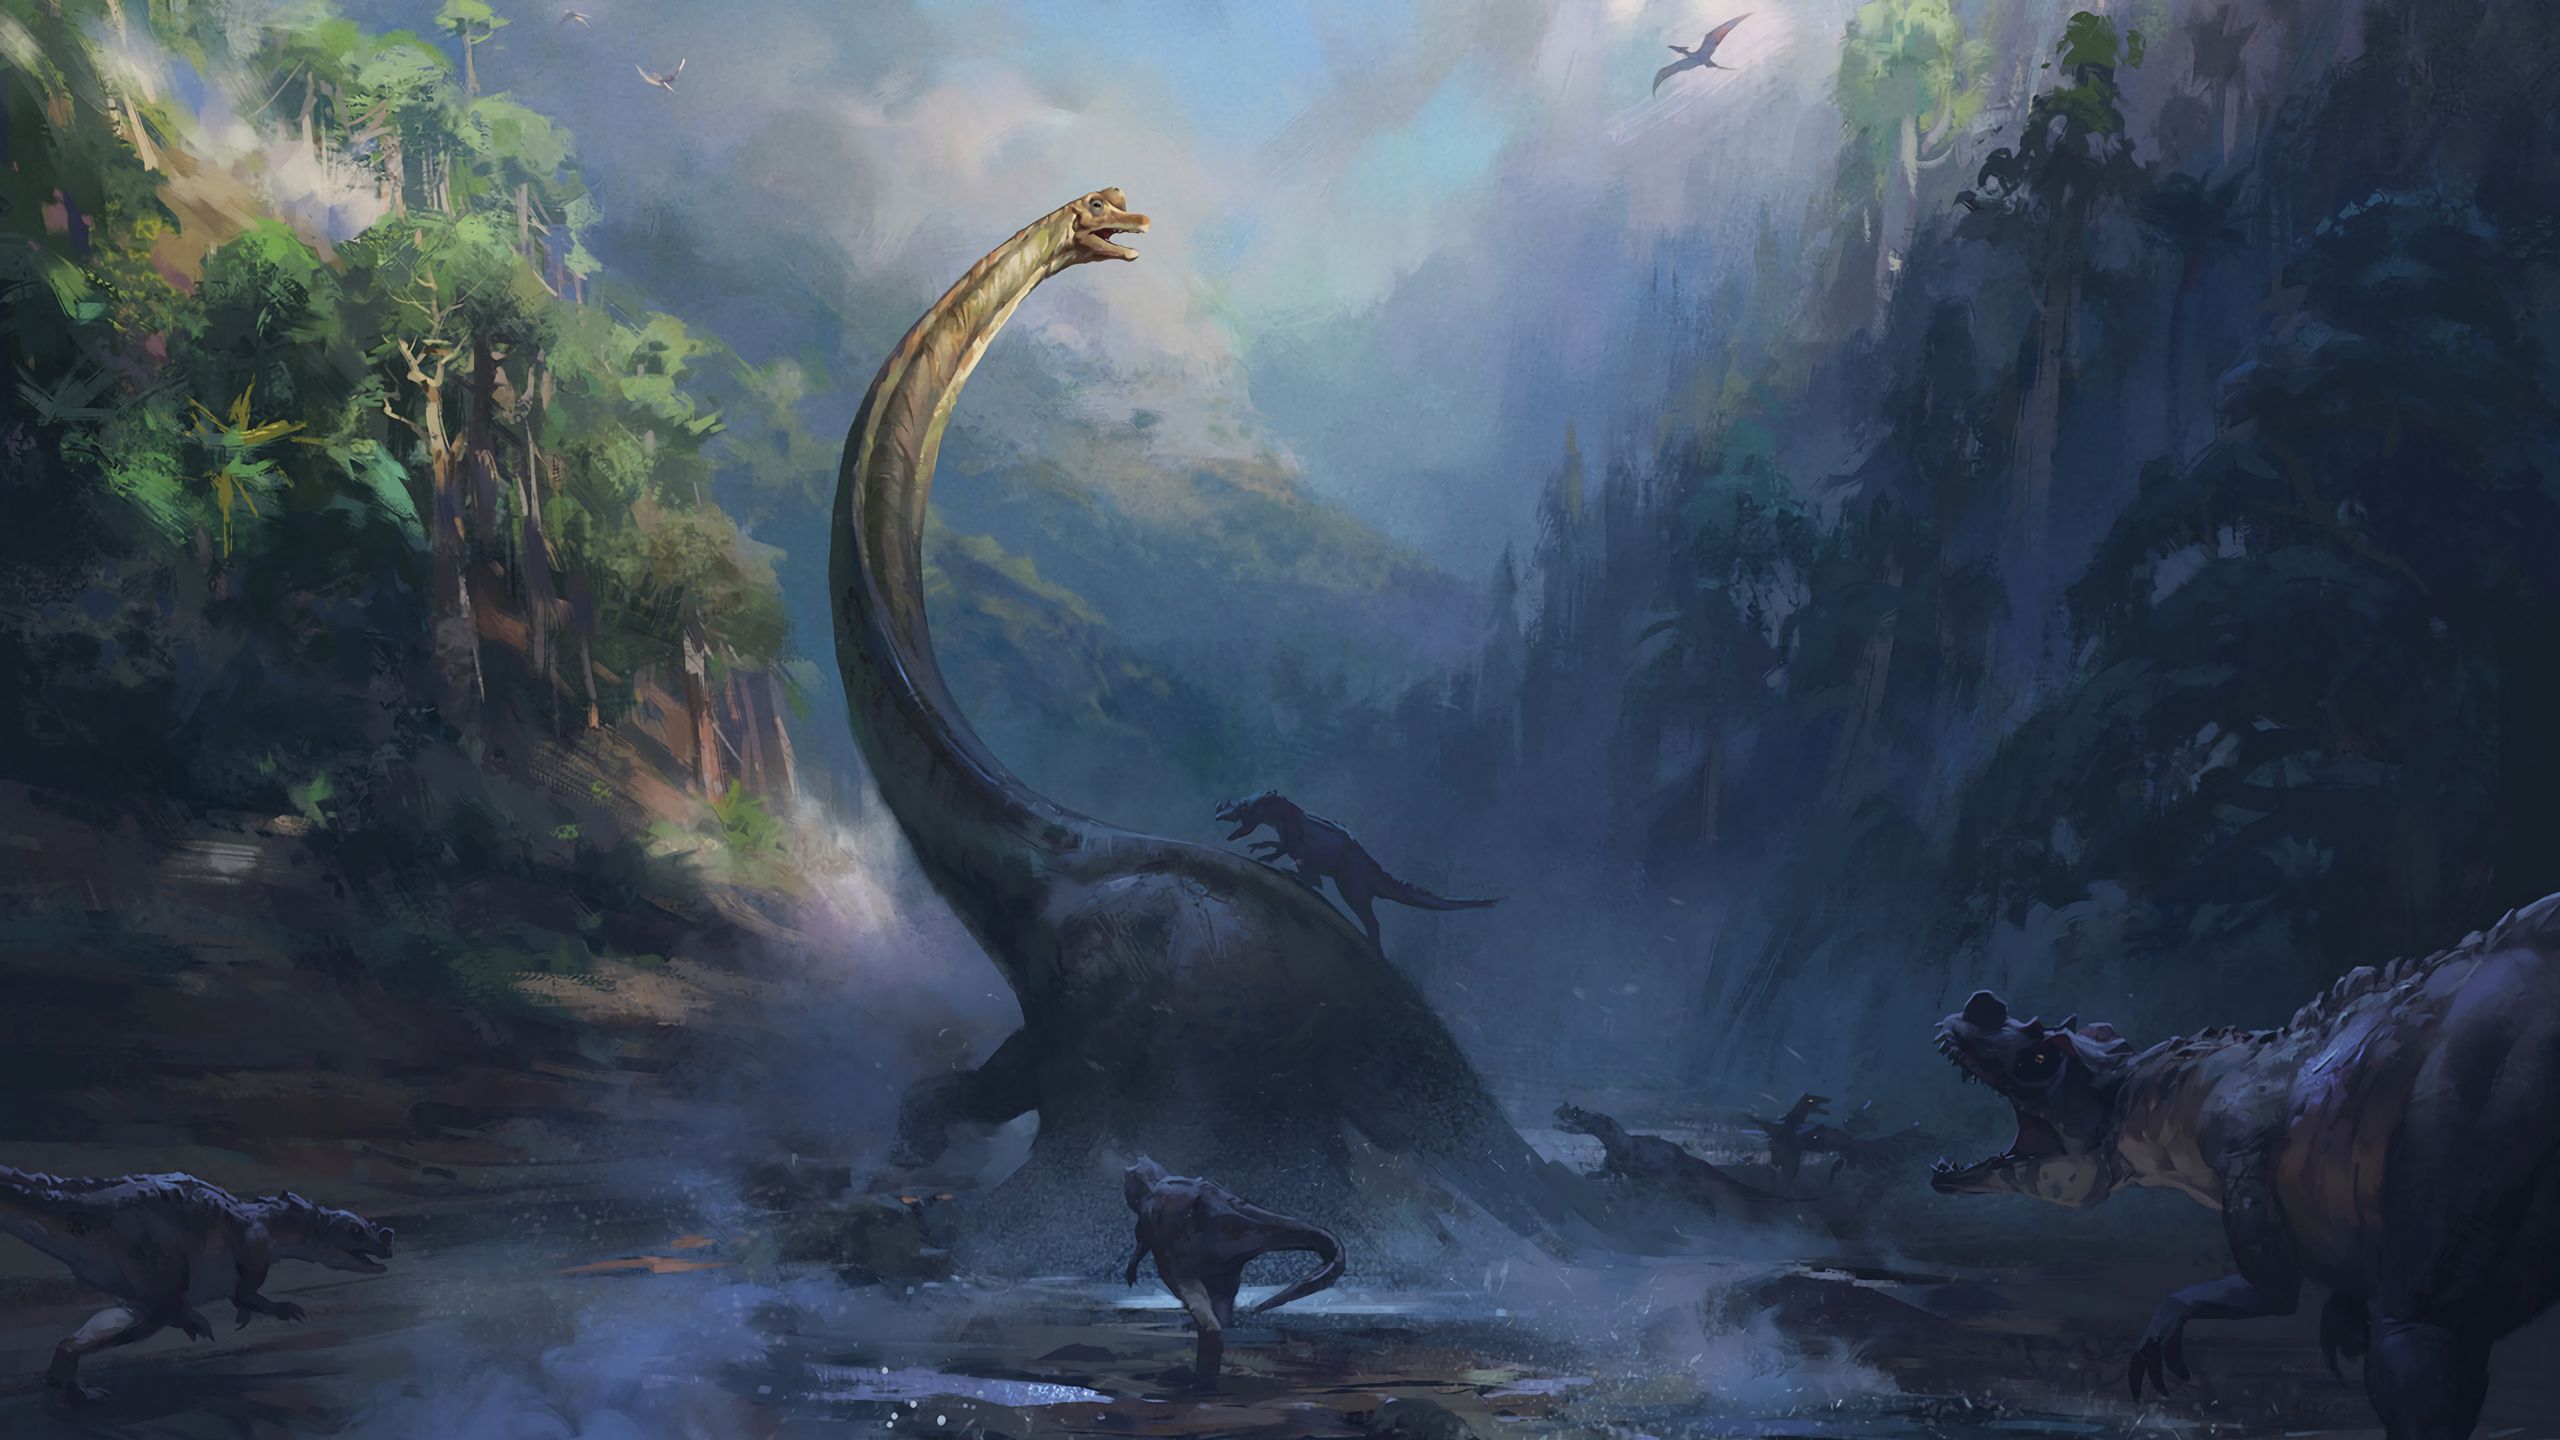 Download wallpaper 2560x1440 dinosaurs art reptiles wildlife